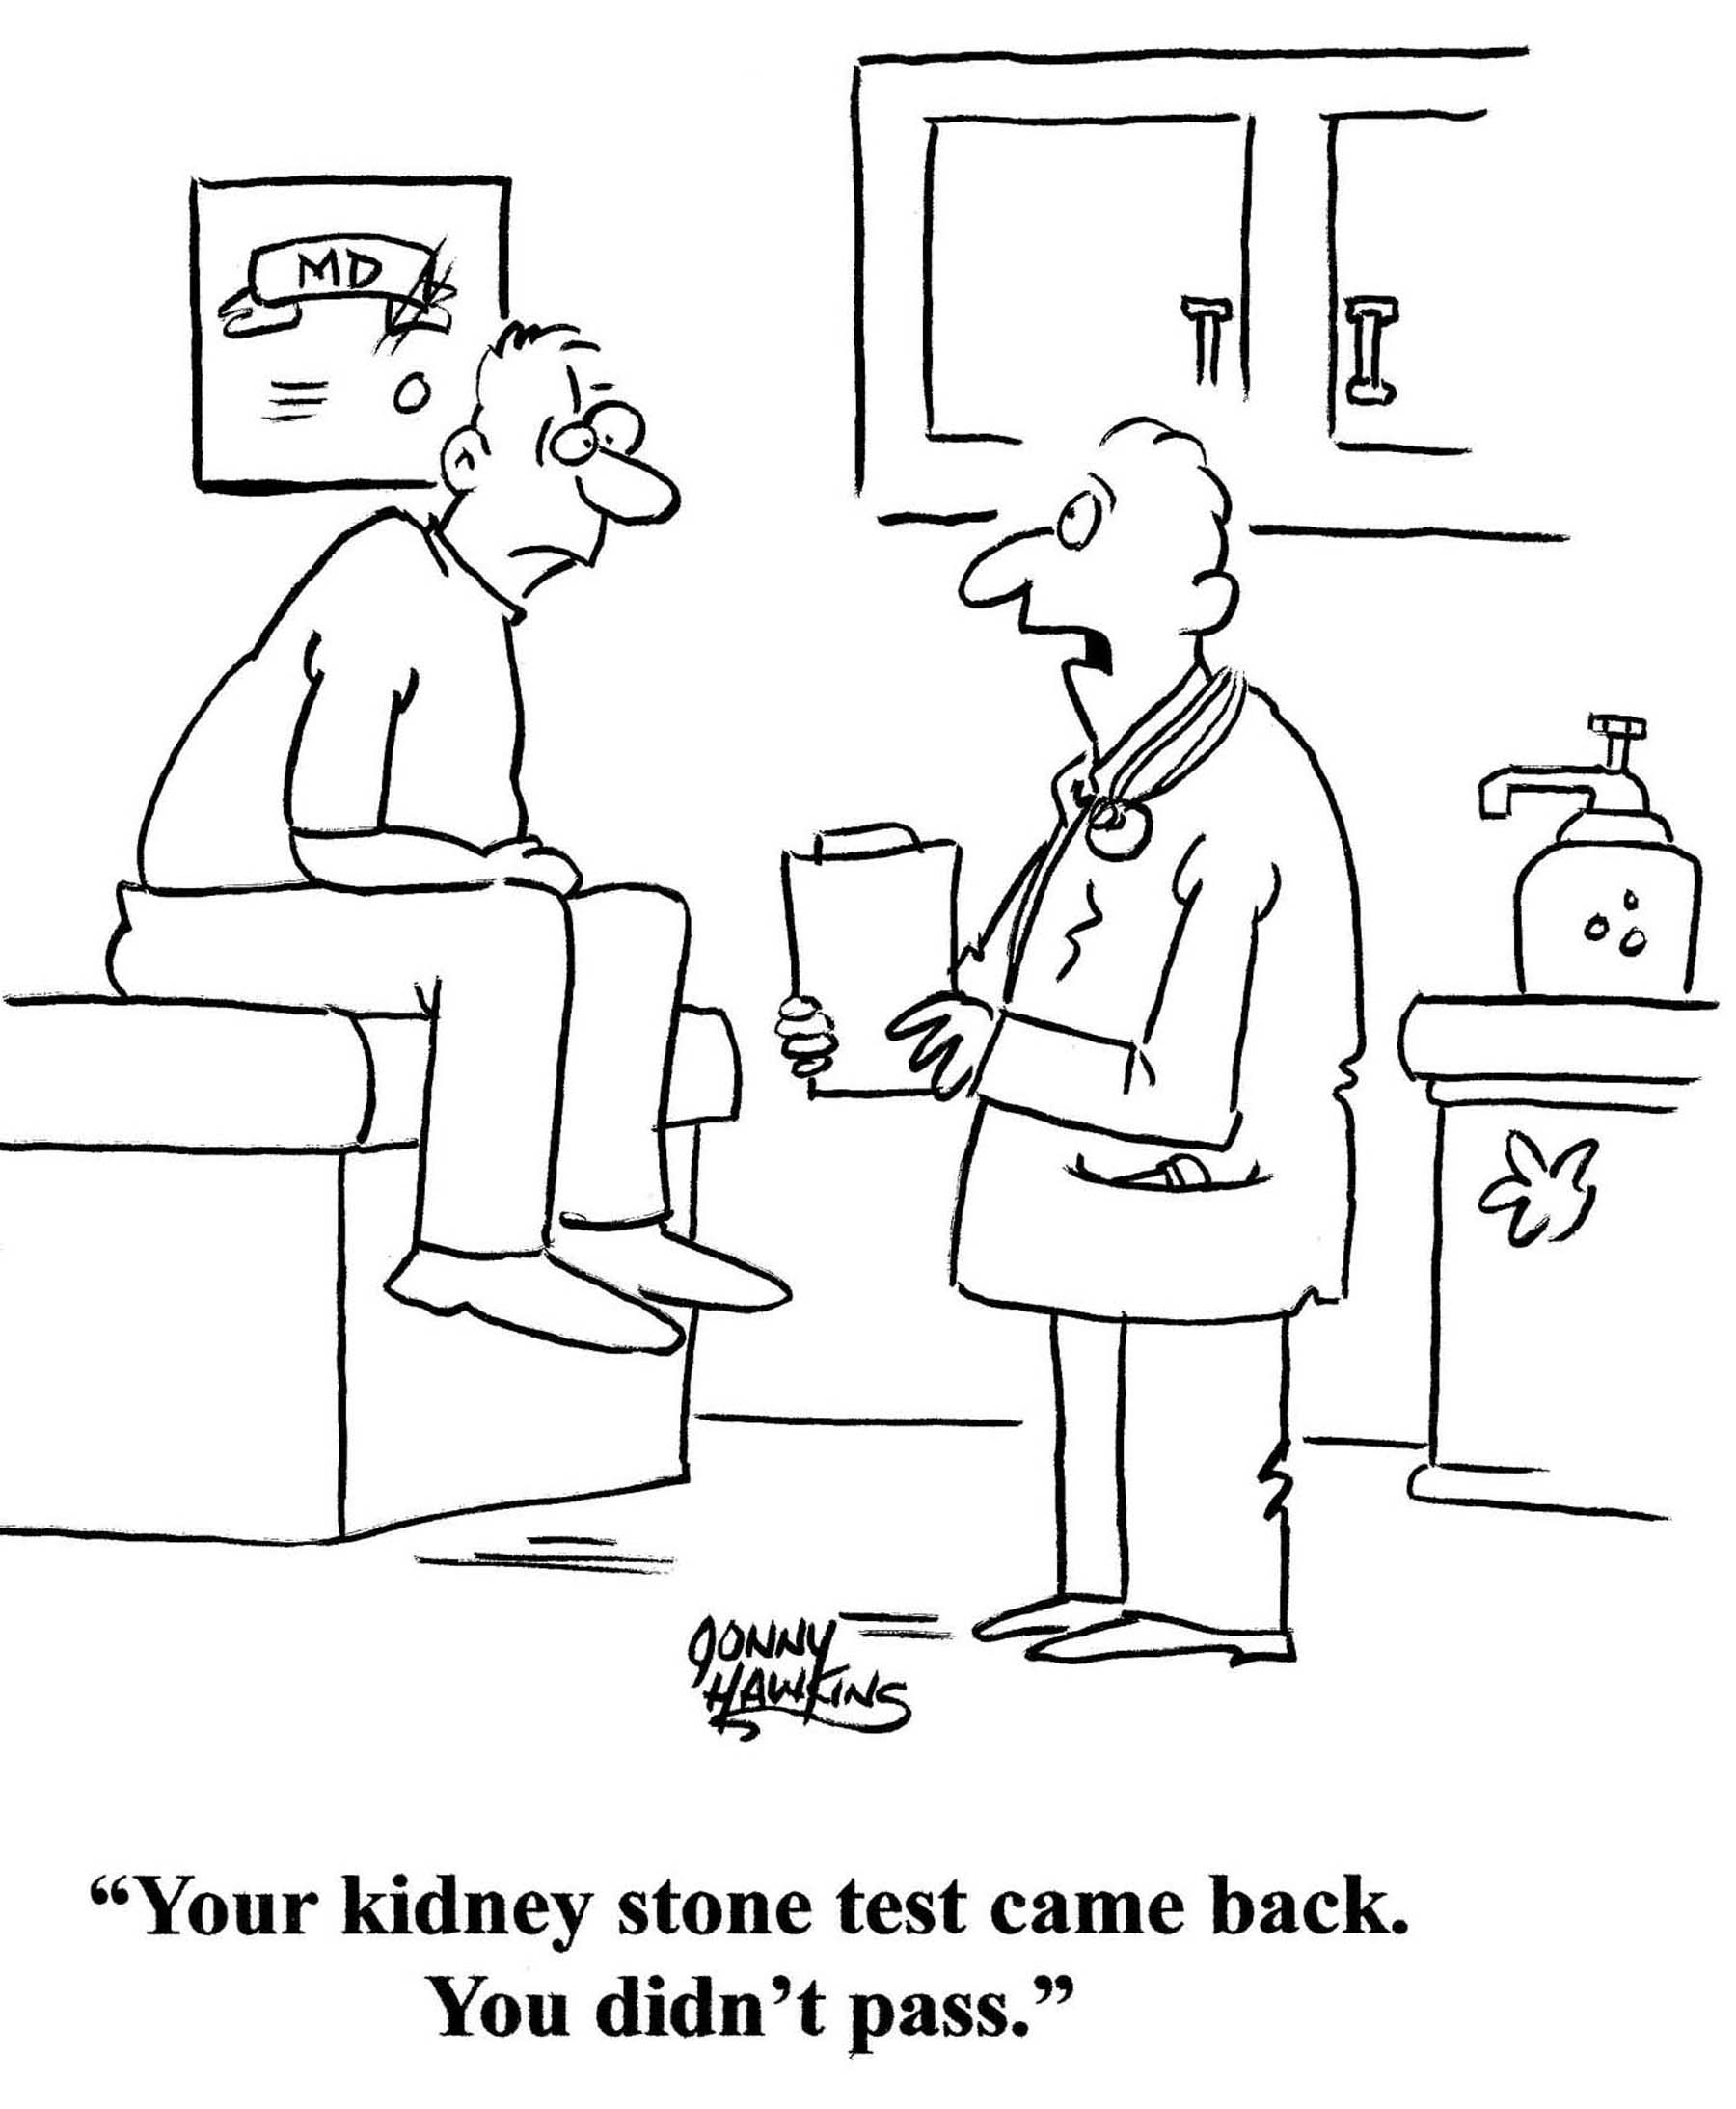 Kidney Stone Test